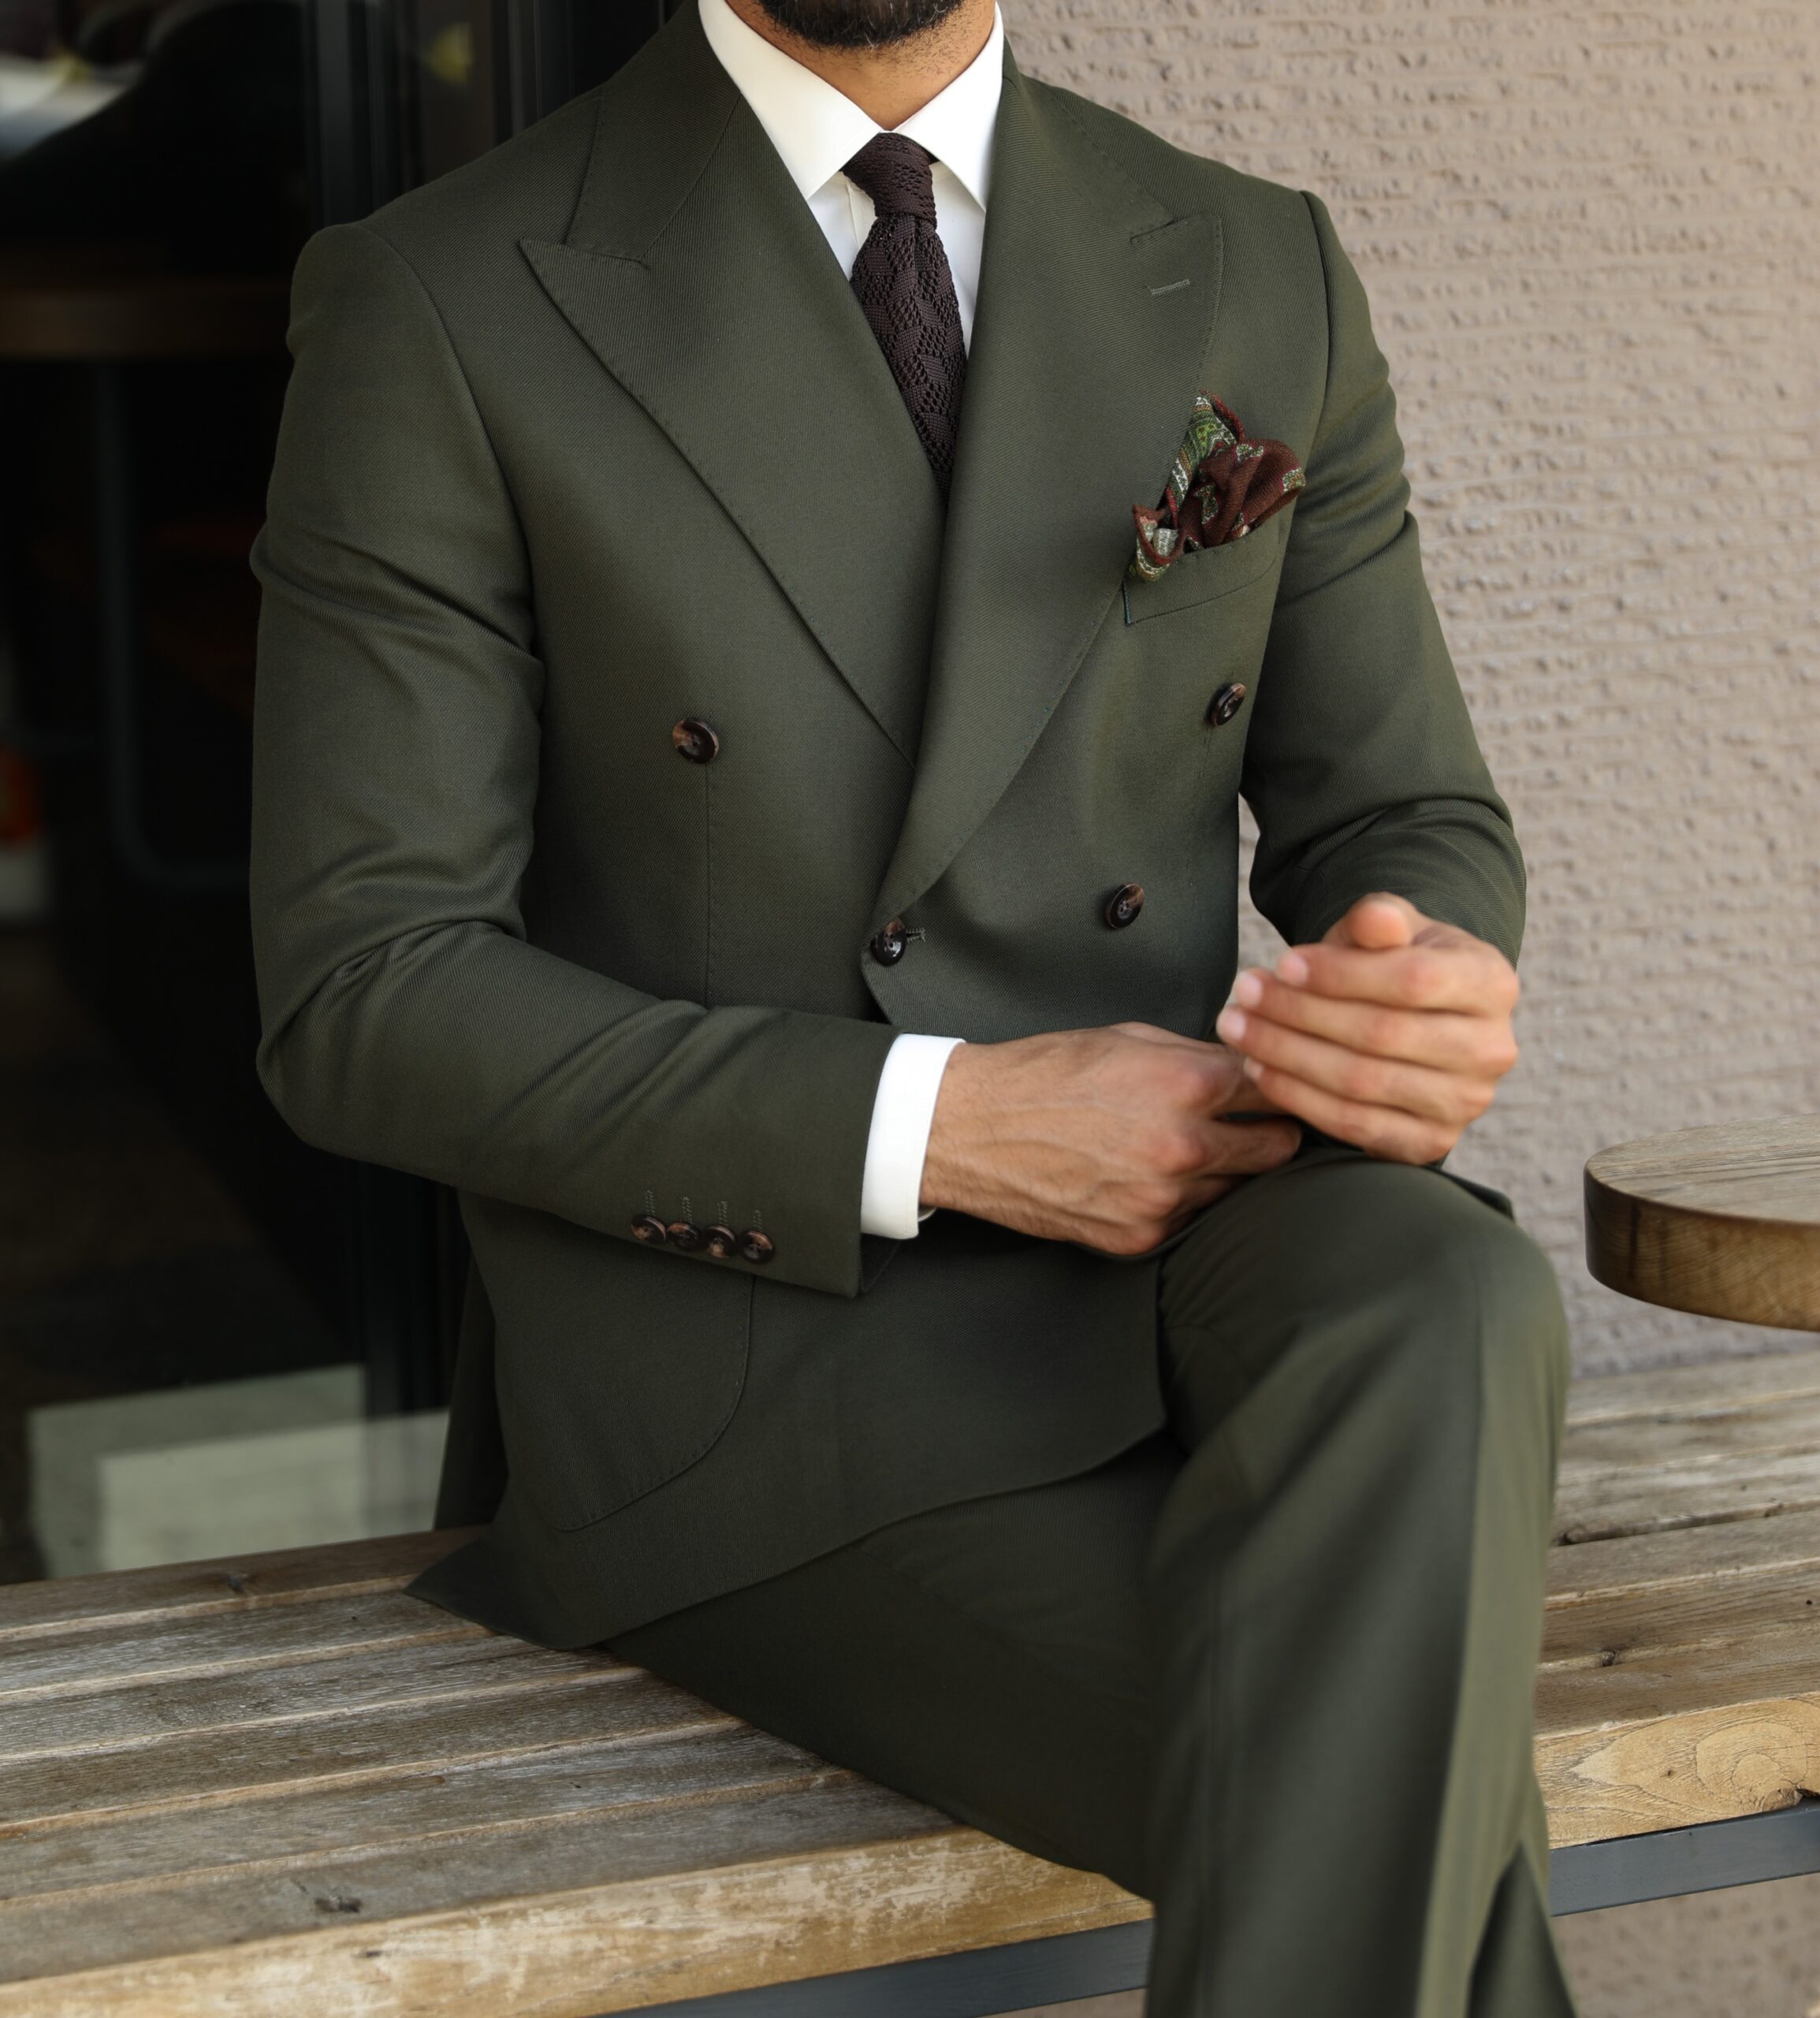 The Dark Green Suit - The Most Flexible Suit Color | How to Wear A Man's  Green Suit | Green suit men, Suit without tie, Green suit